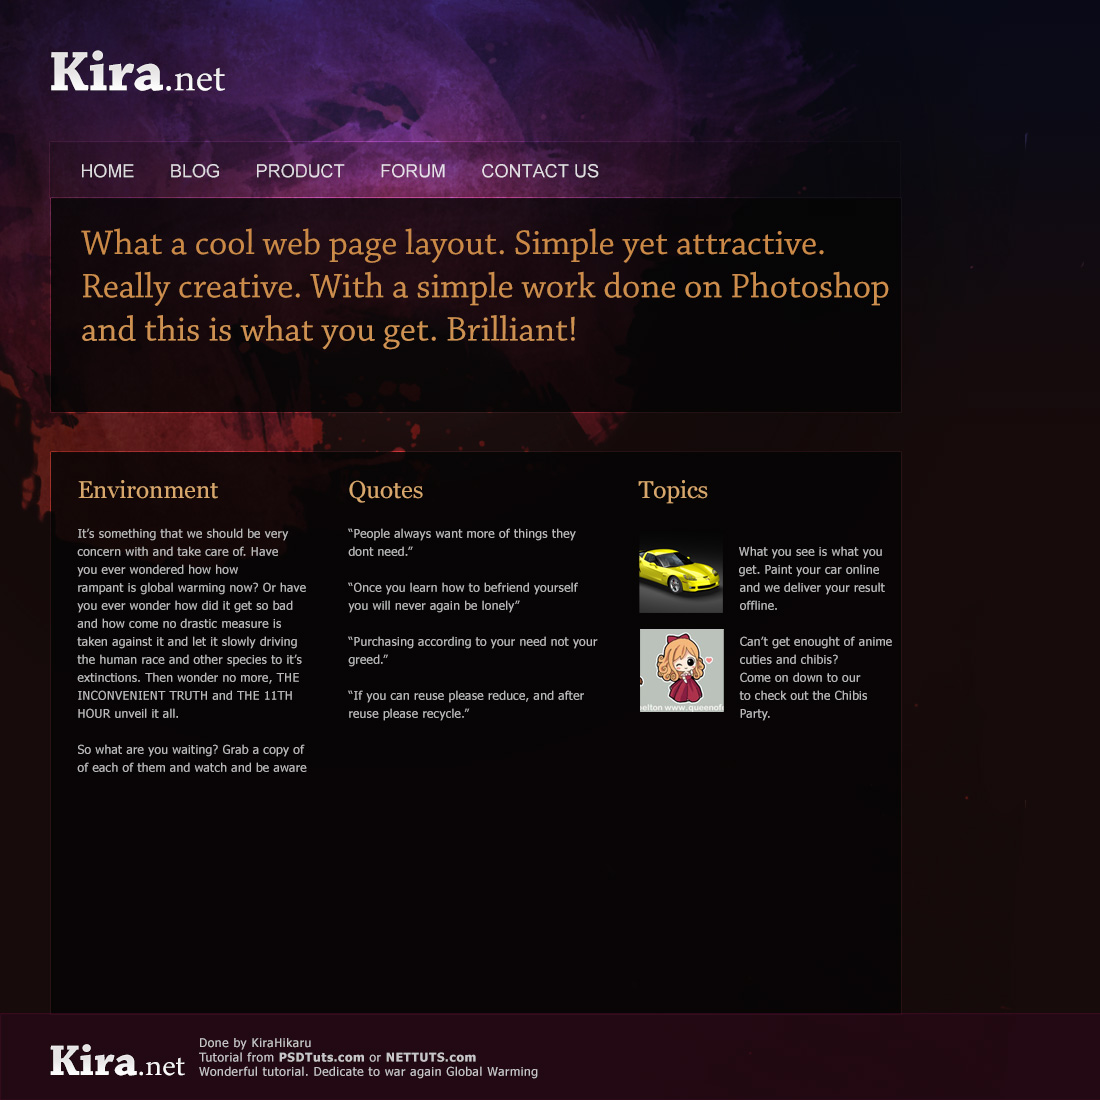 Kira.net